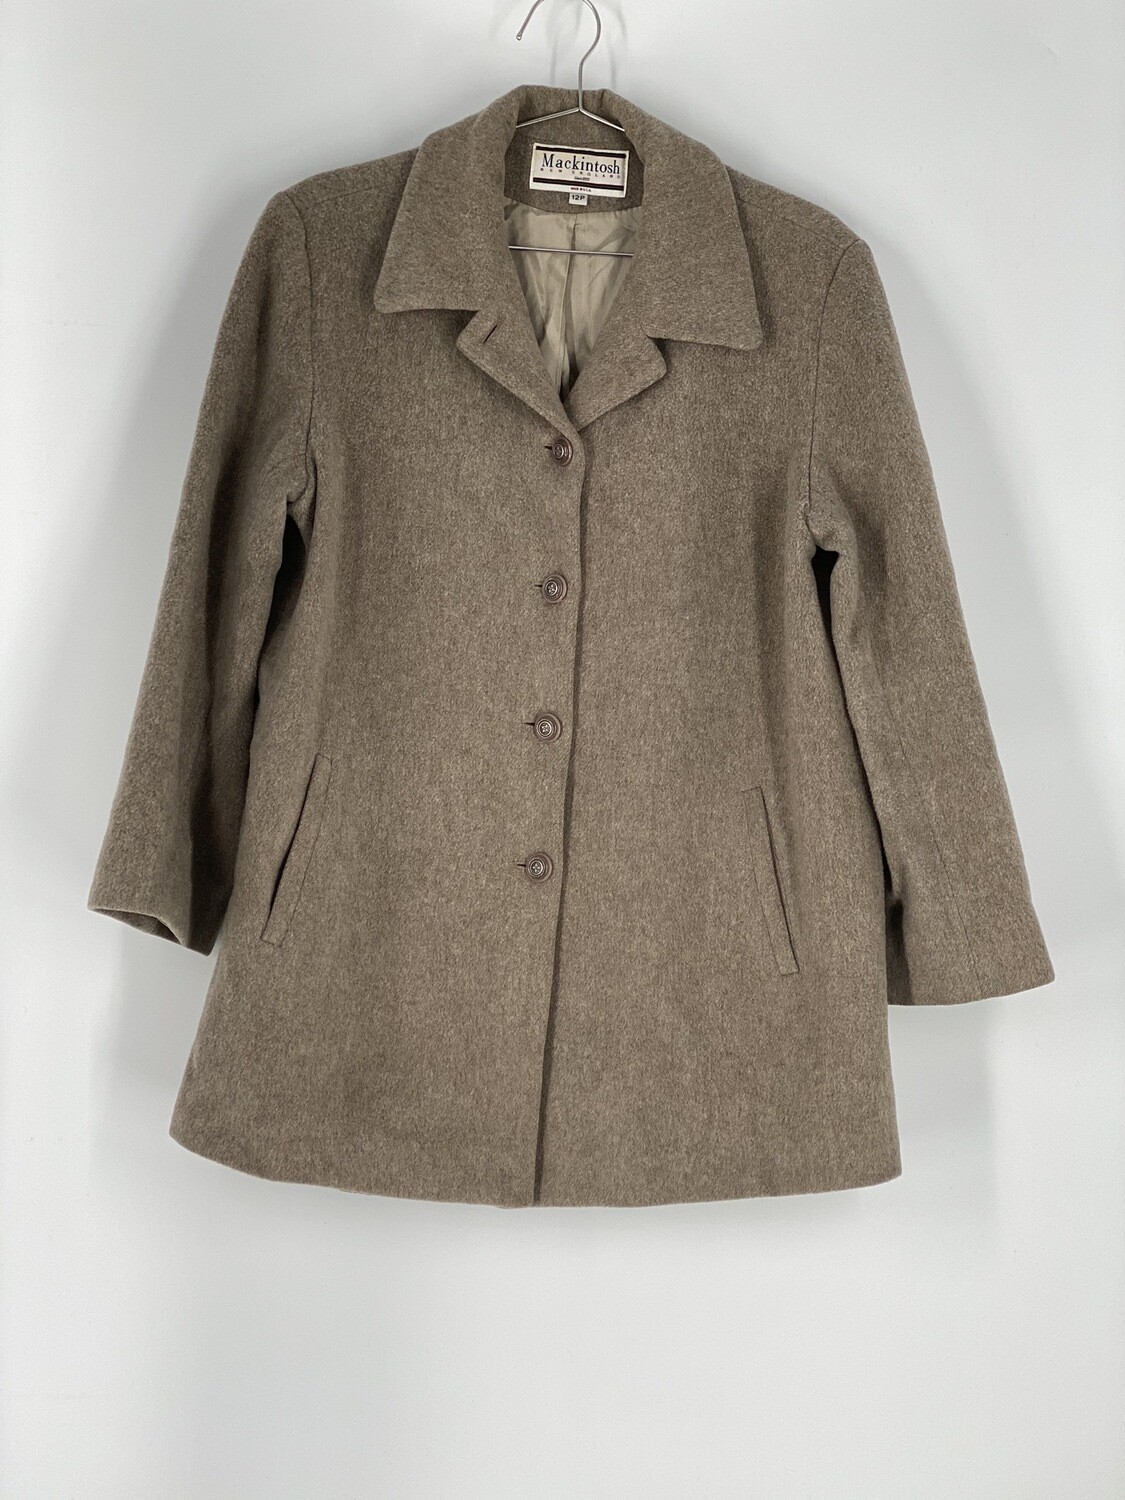 Mackintosh Tan Heavy Coat Size L